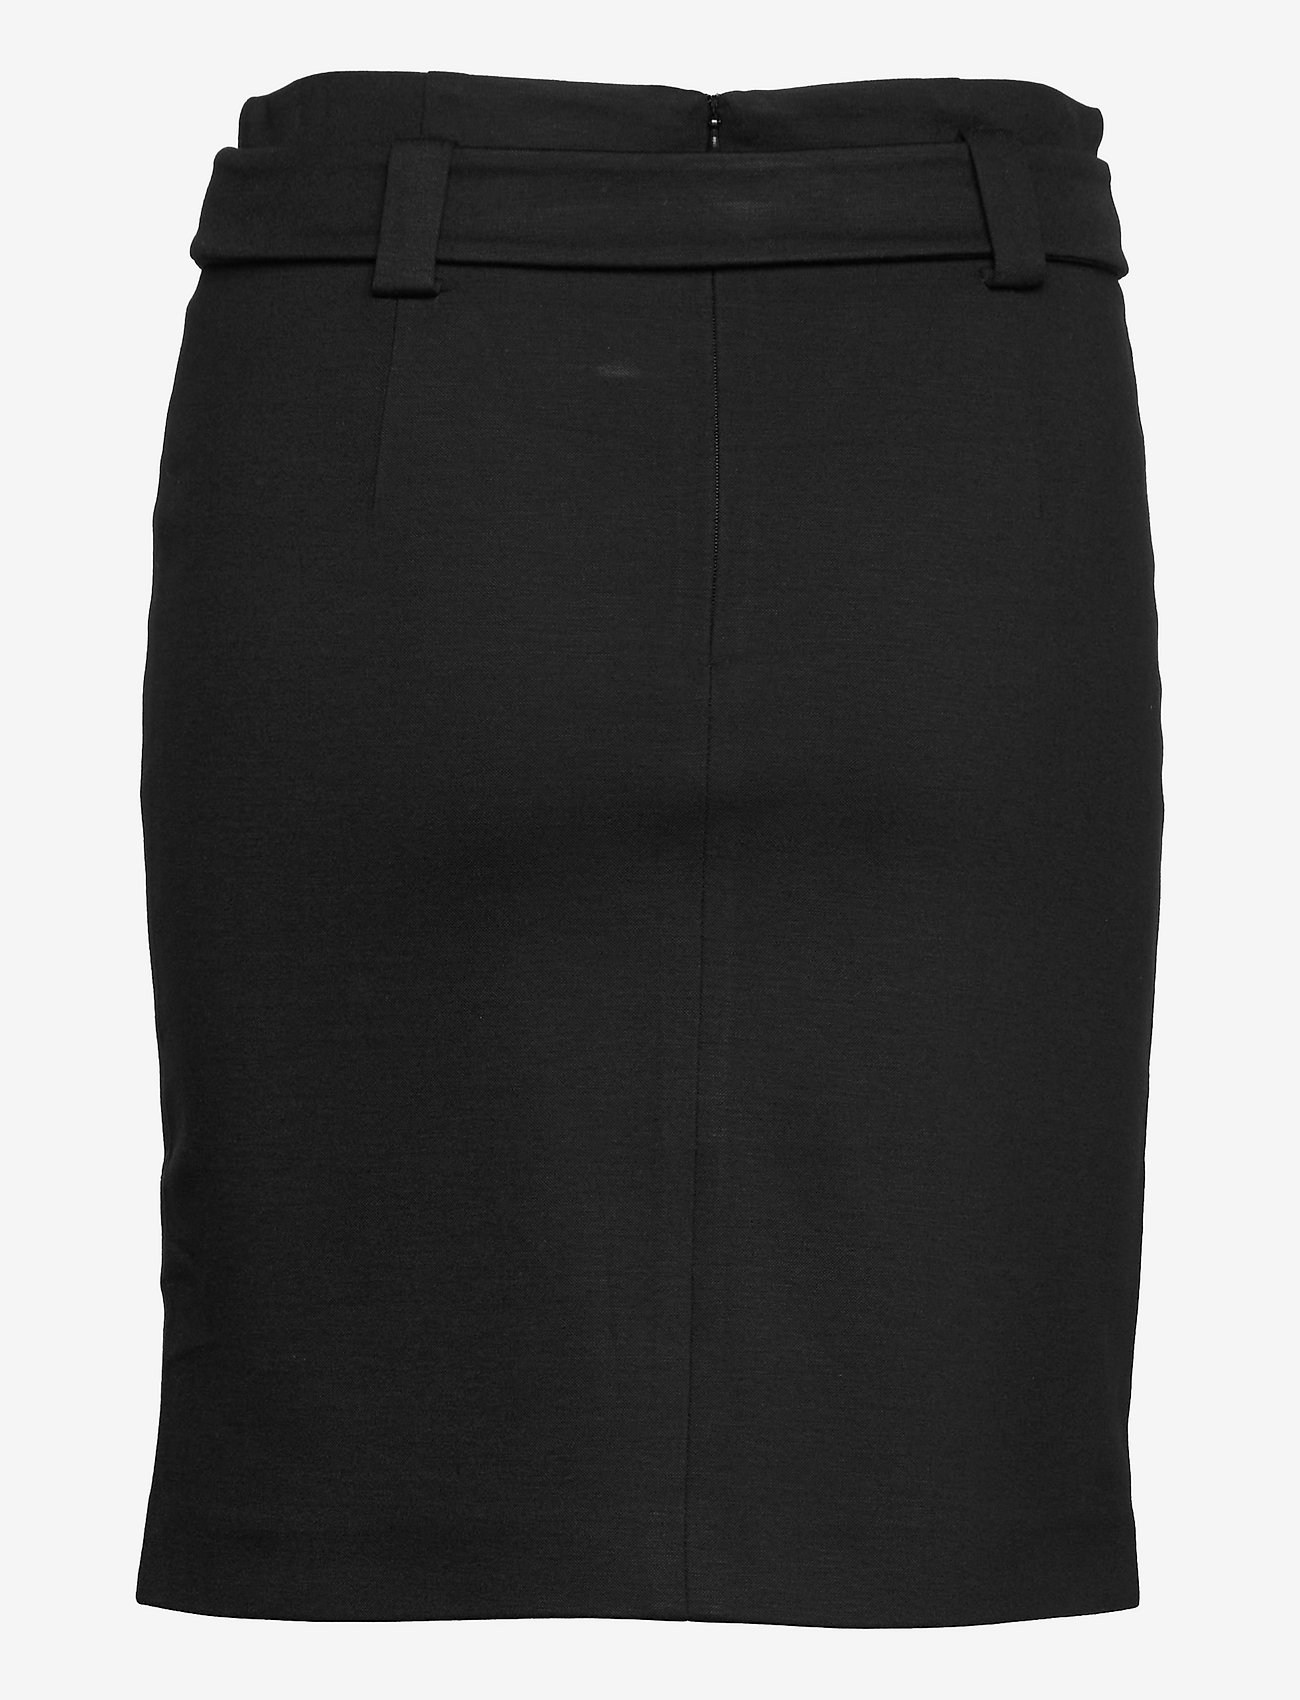 Esprit Collection - Fashion Skirt - korte nederdele - black - 1